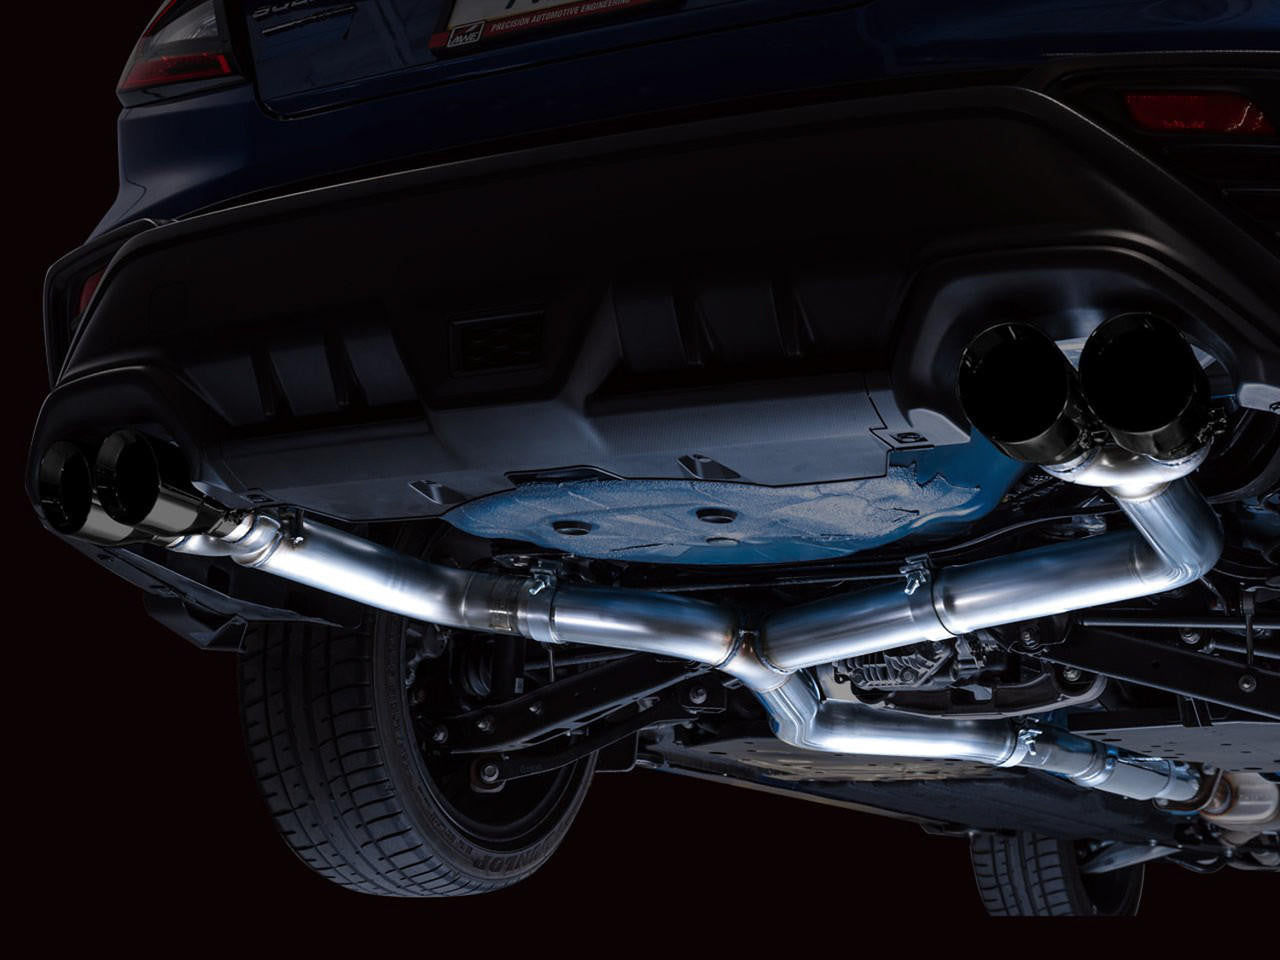 AWE Tuning AWE Track Edition Exhaust for VB Subaru WRX - Diamond Black Tips 3020-43979 